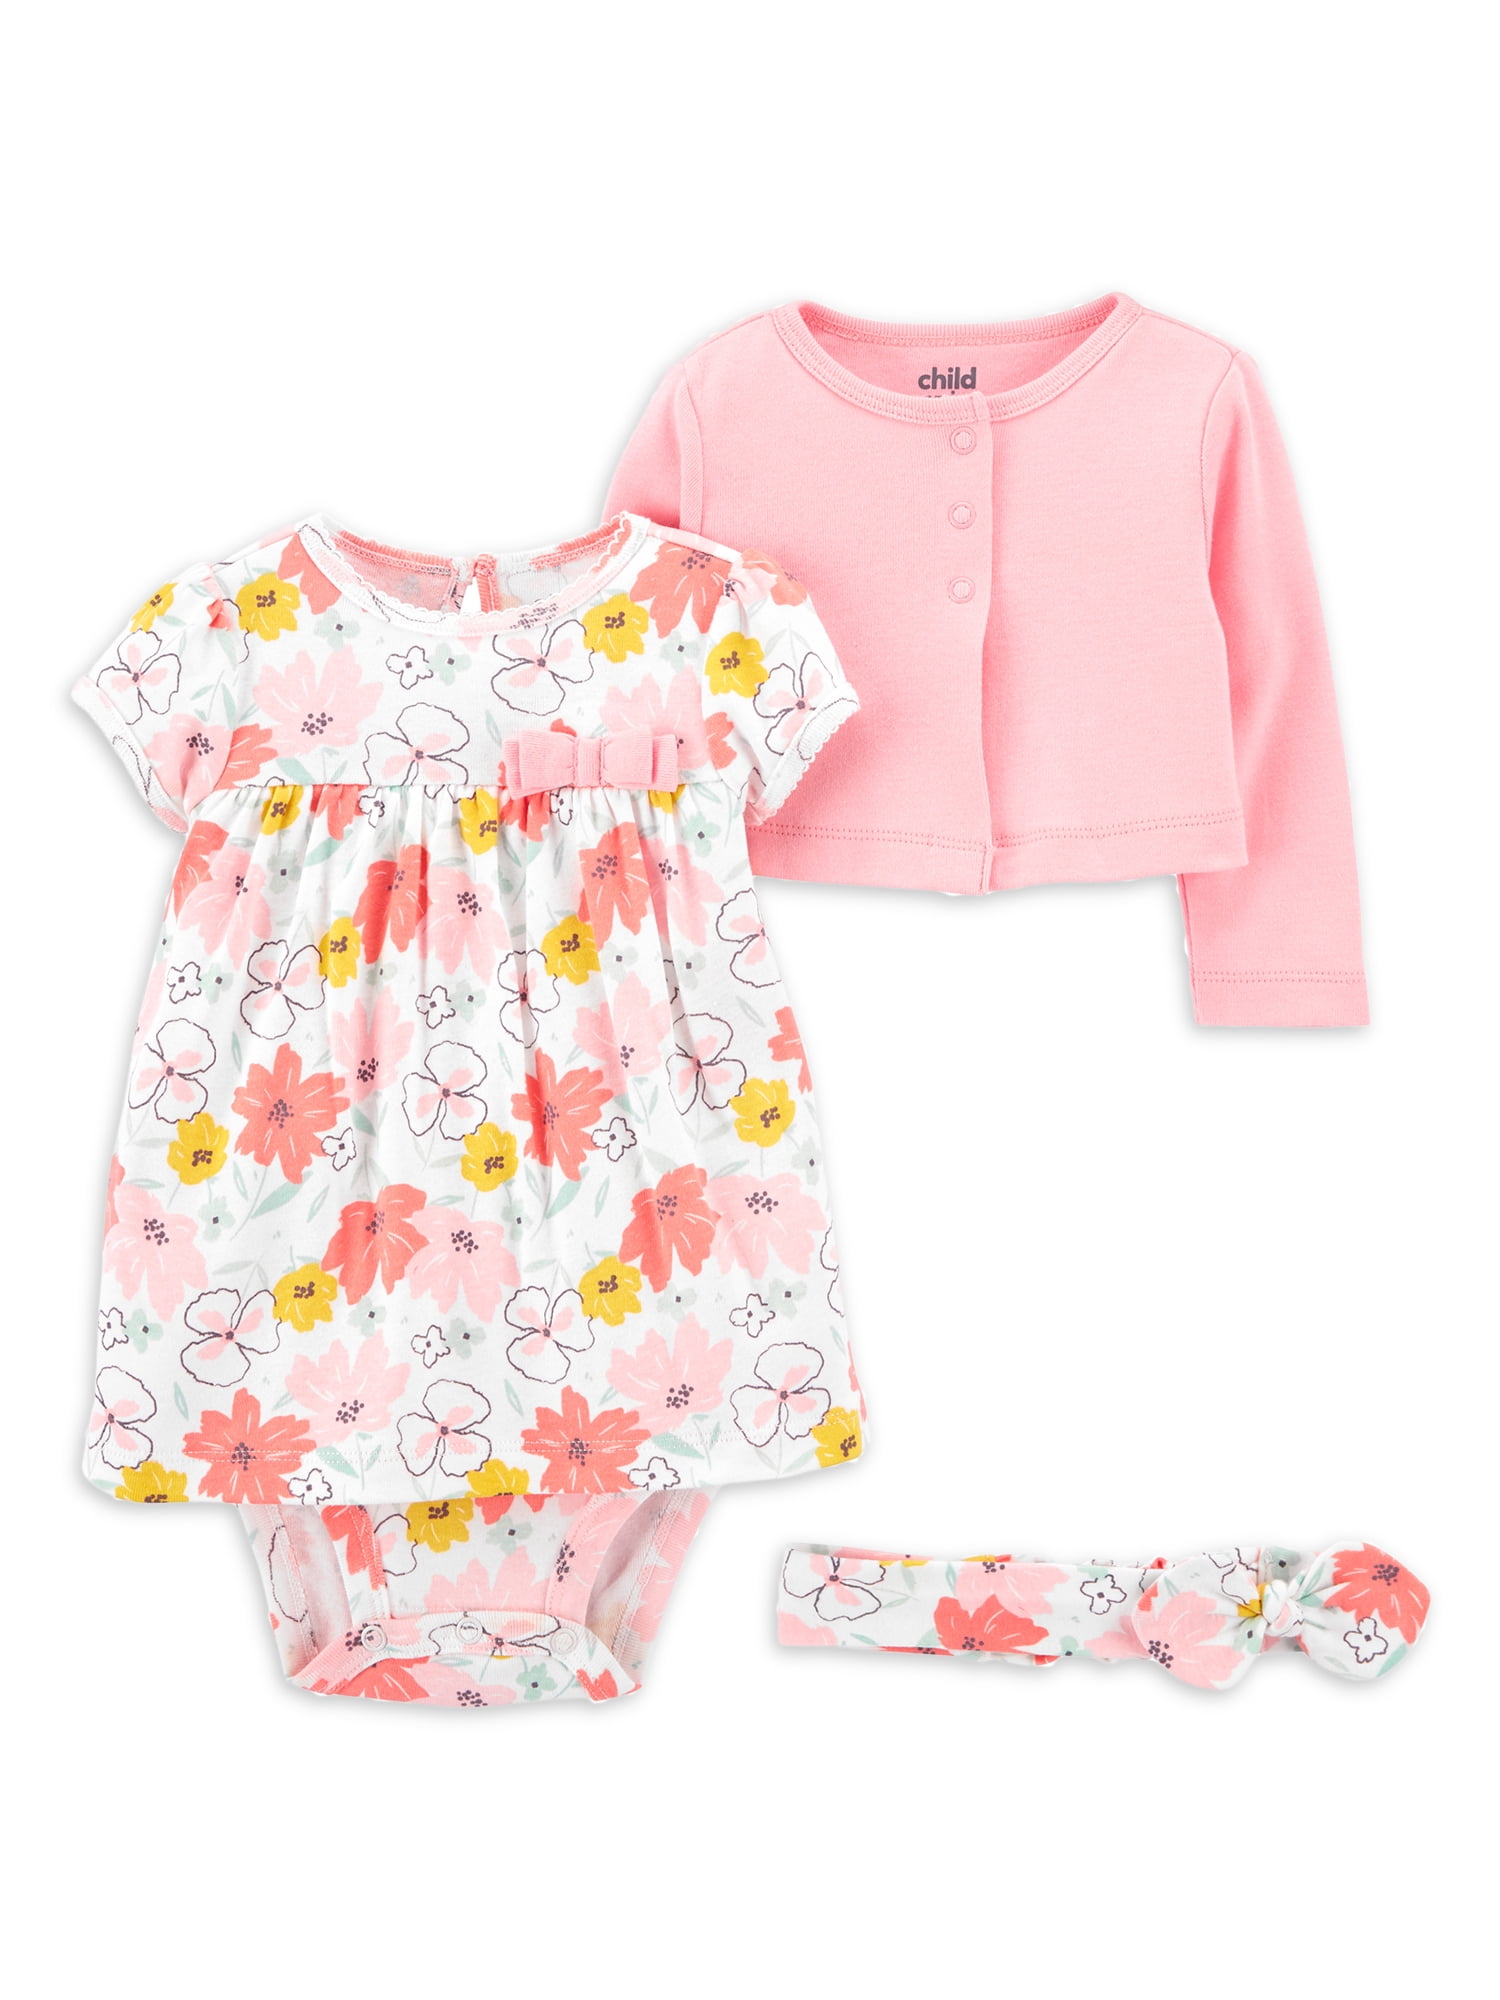 BabyPrem Premature Baby Clothes Girls Summer Dresses Tiny Dress Set 3-8lb 